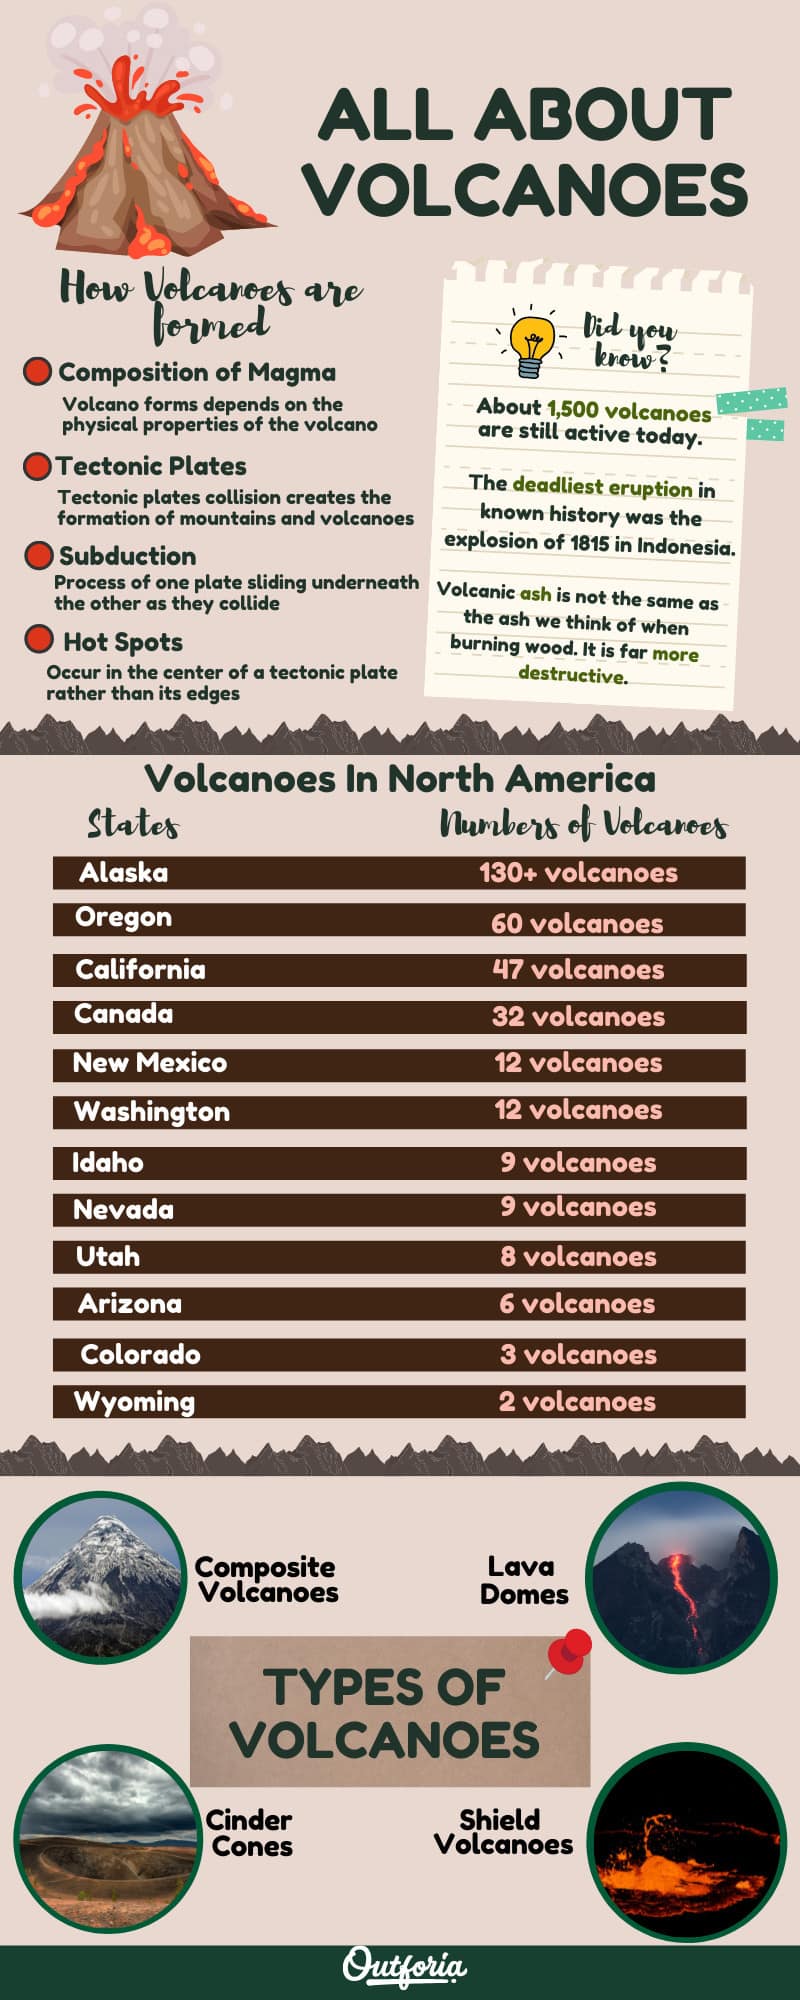 Types of volcanoes infographic